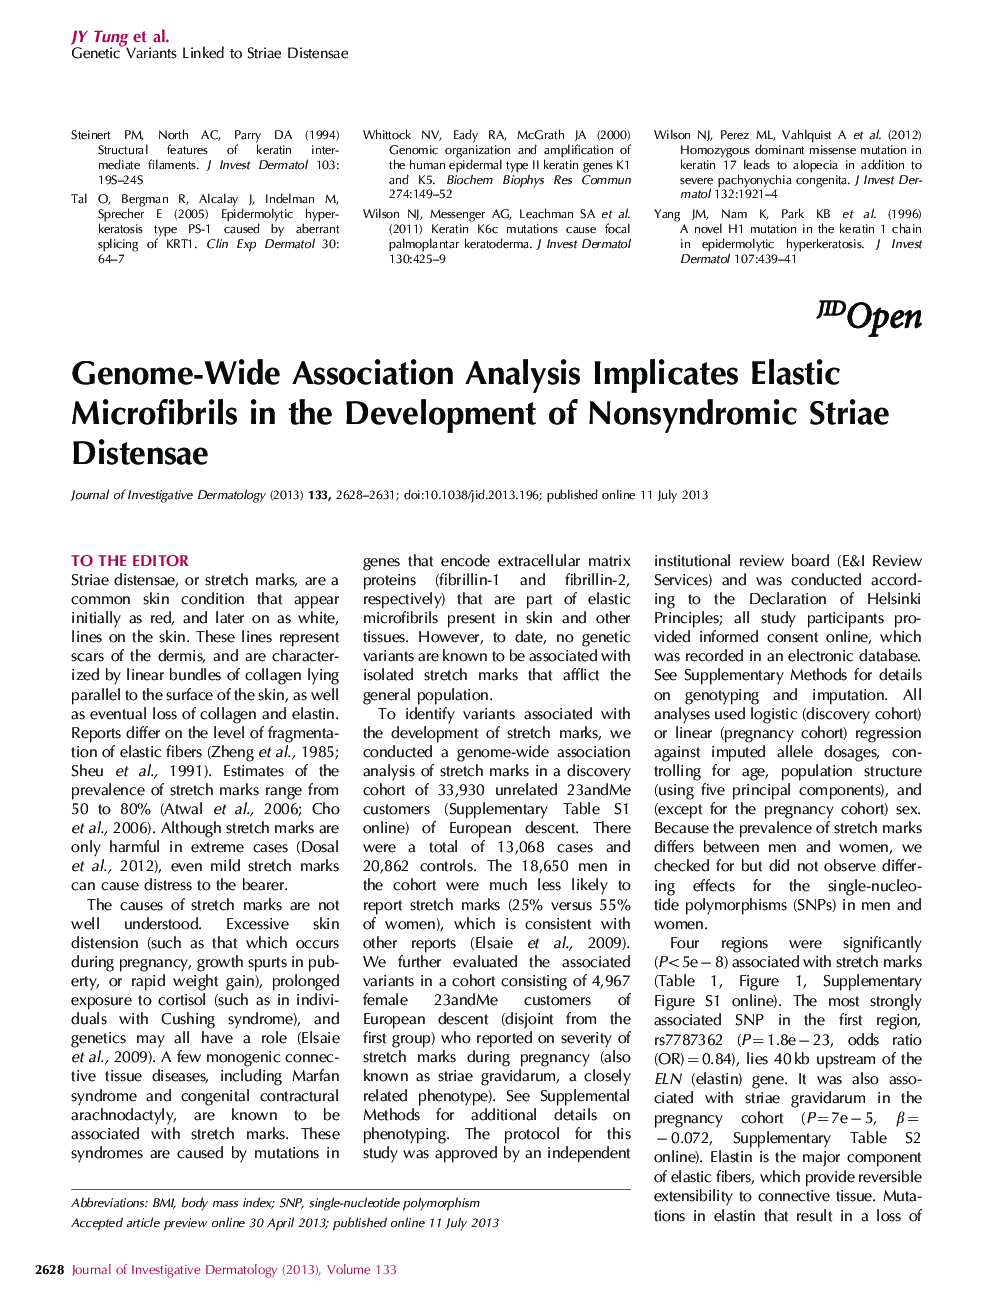 Genome-Wide Association Analysis Implicates Elastic Microfibrils in the Development of Nonsyndromic Striae Distensae